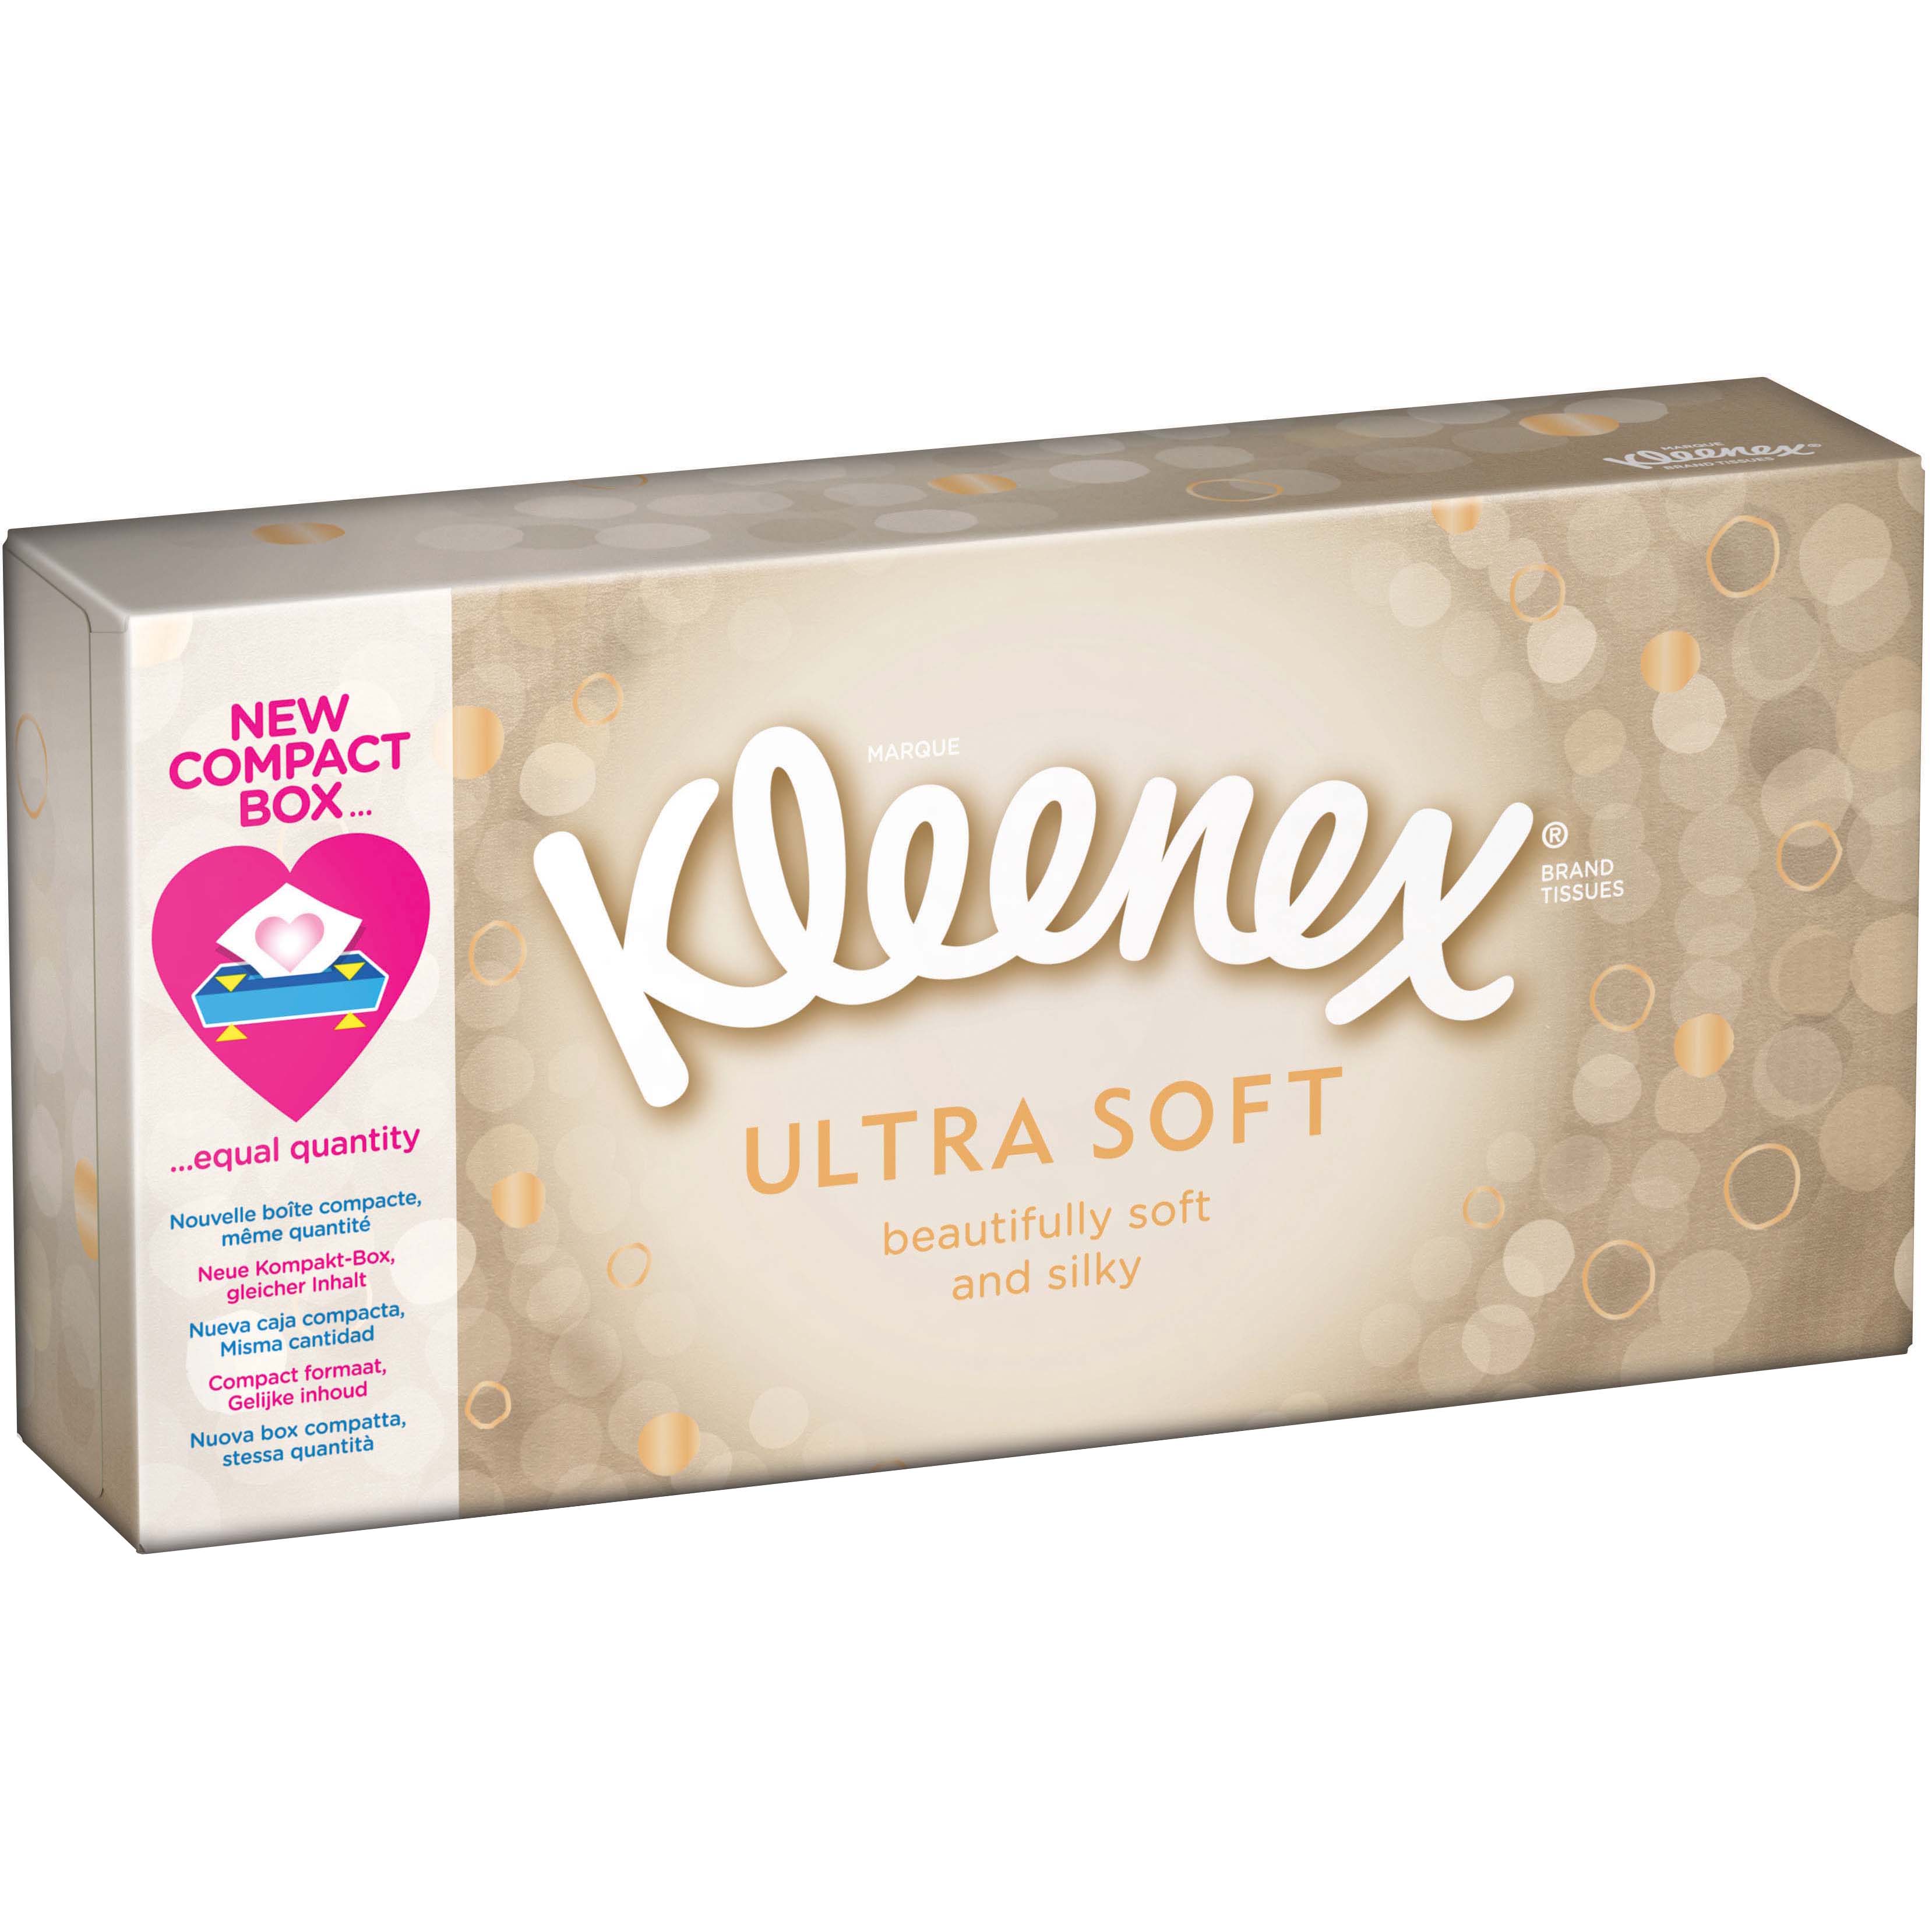 Салфетки Kleenex UltraSoft в коробке, 80 шт. - фото 1